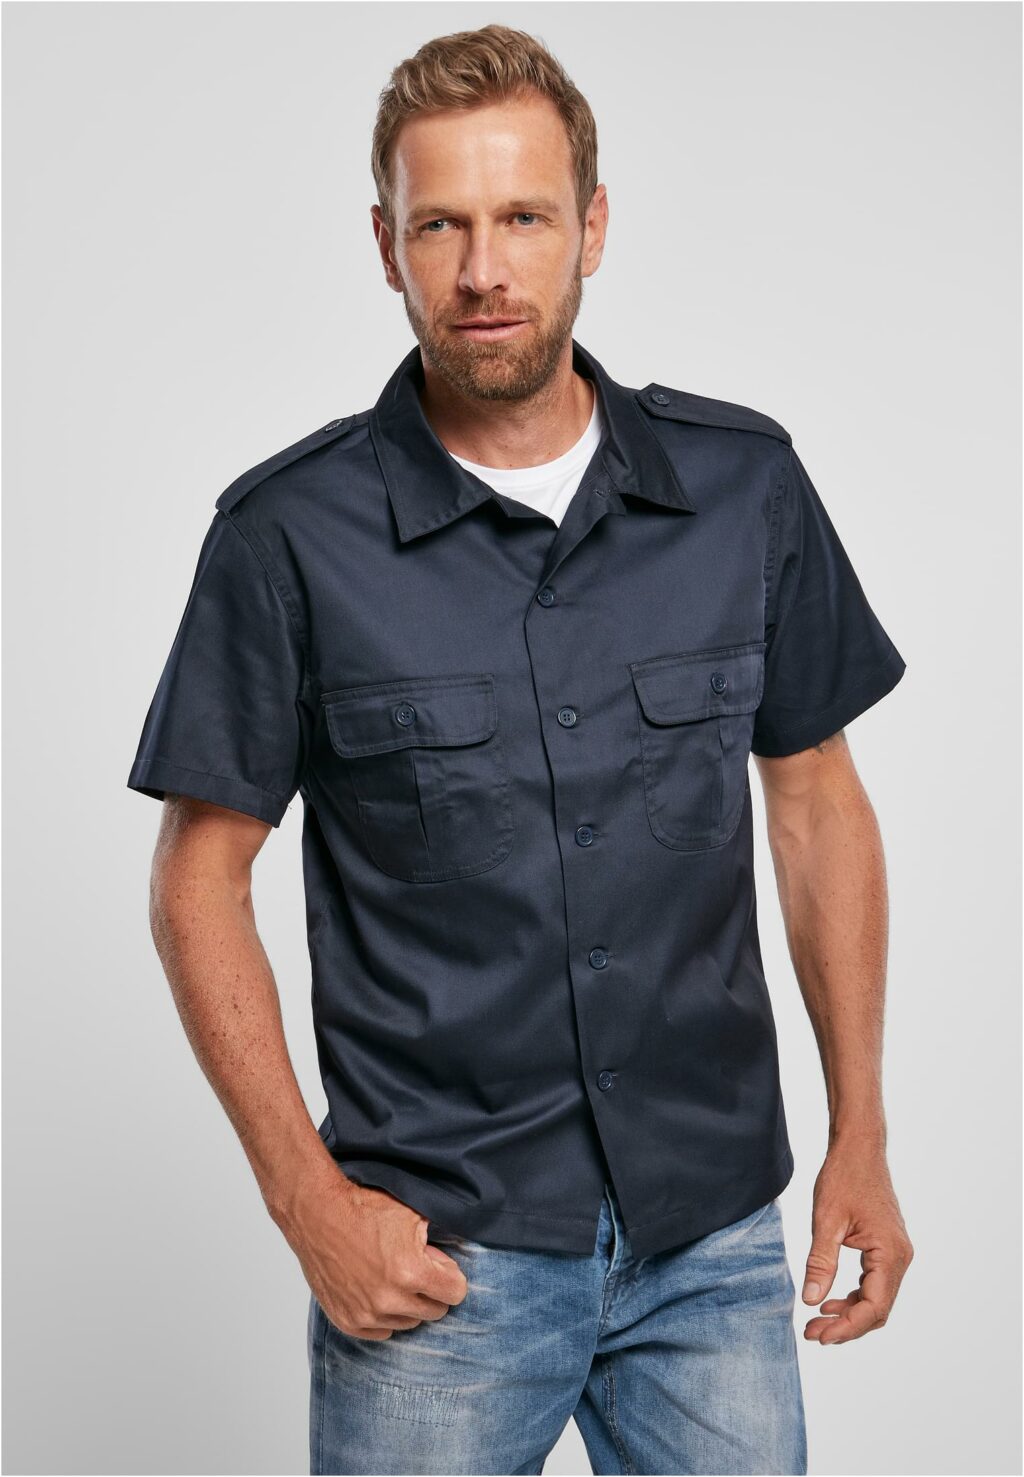 Brandit Short Sleeves US Shirt navy BD4101